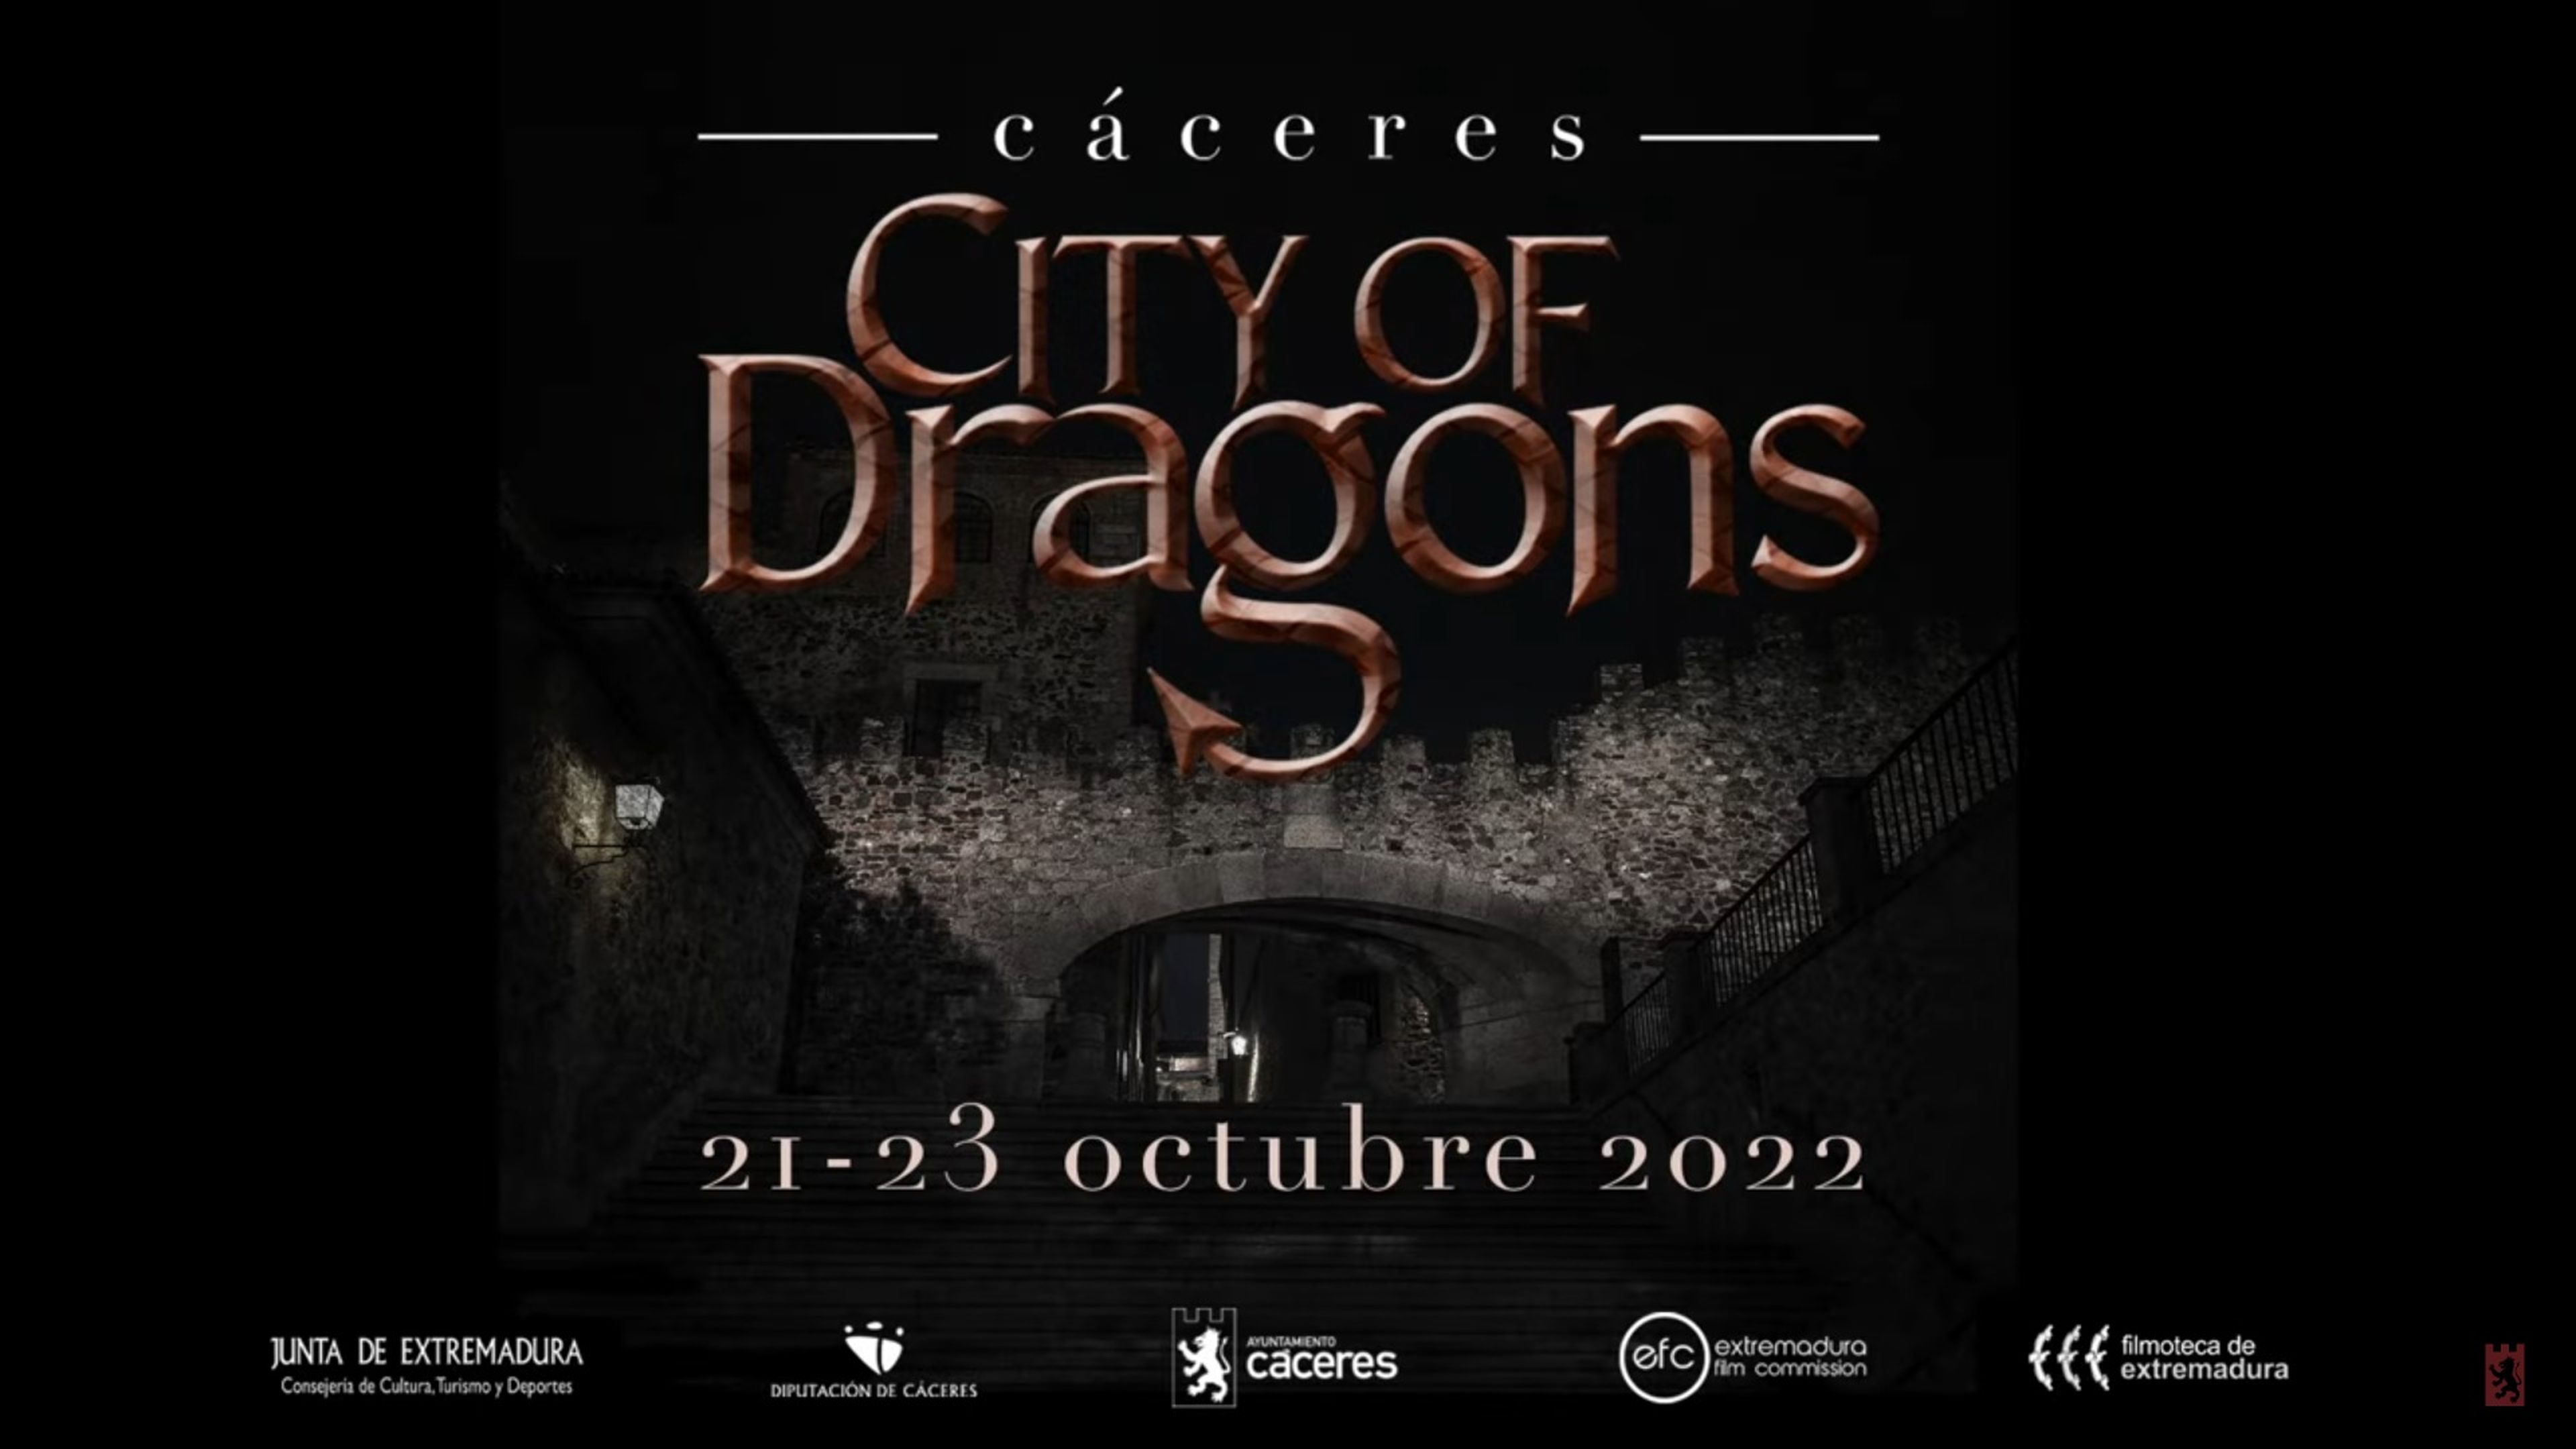 Cáceres City of Dragons